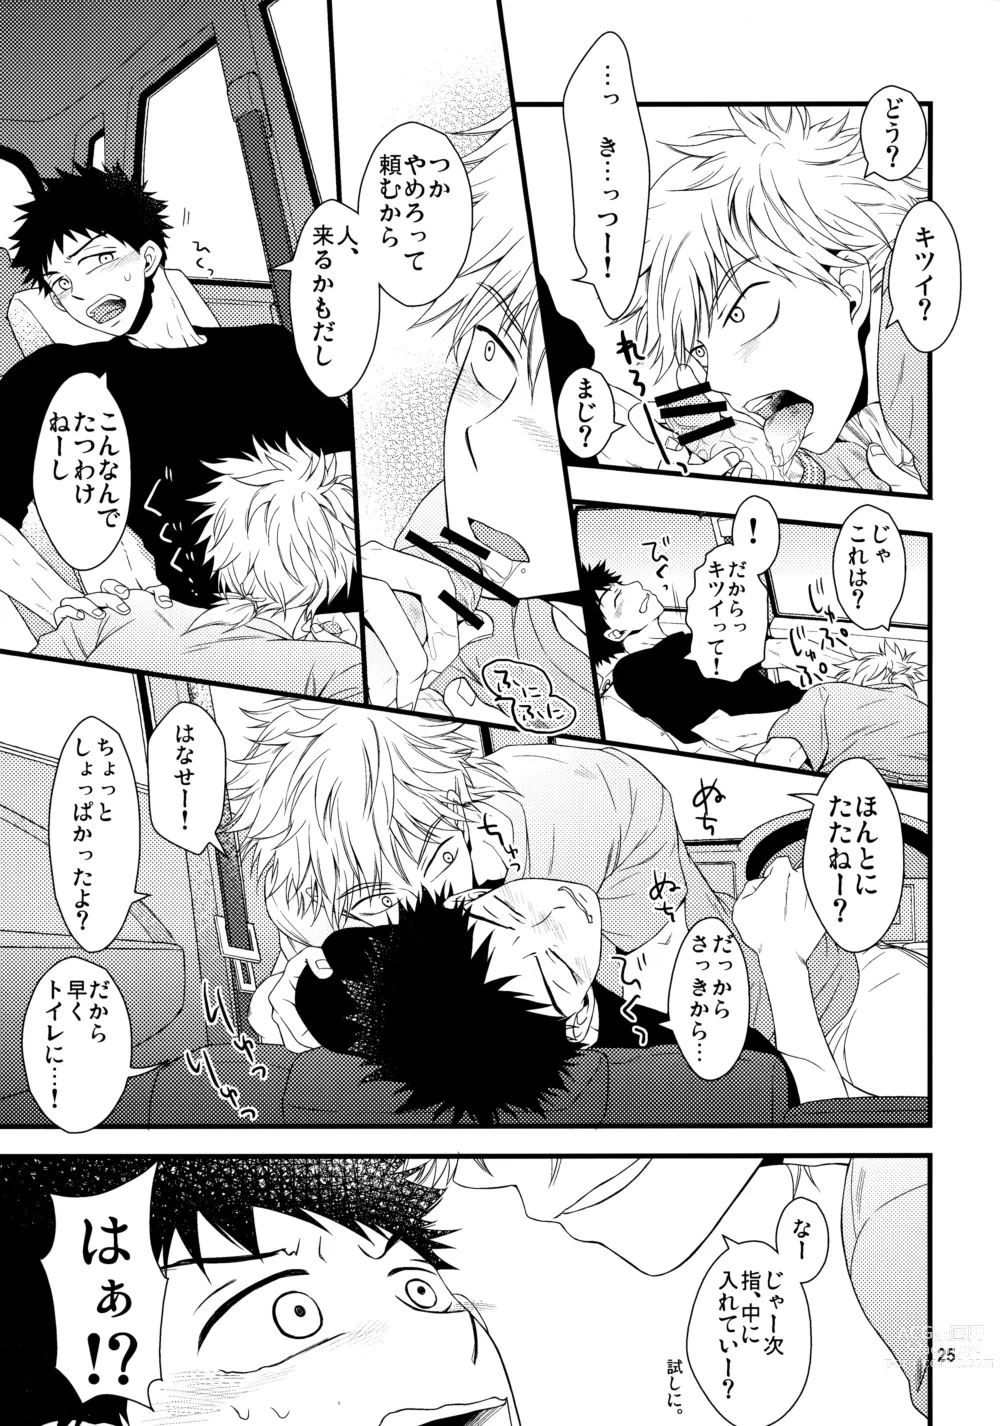 Page 24 of doujinshi Kaki